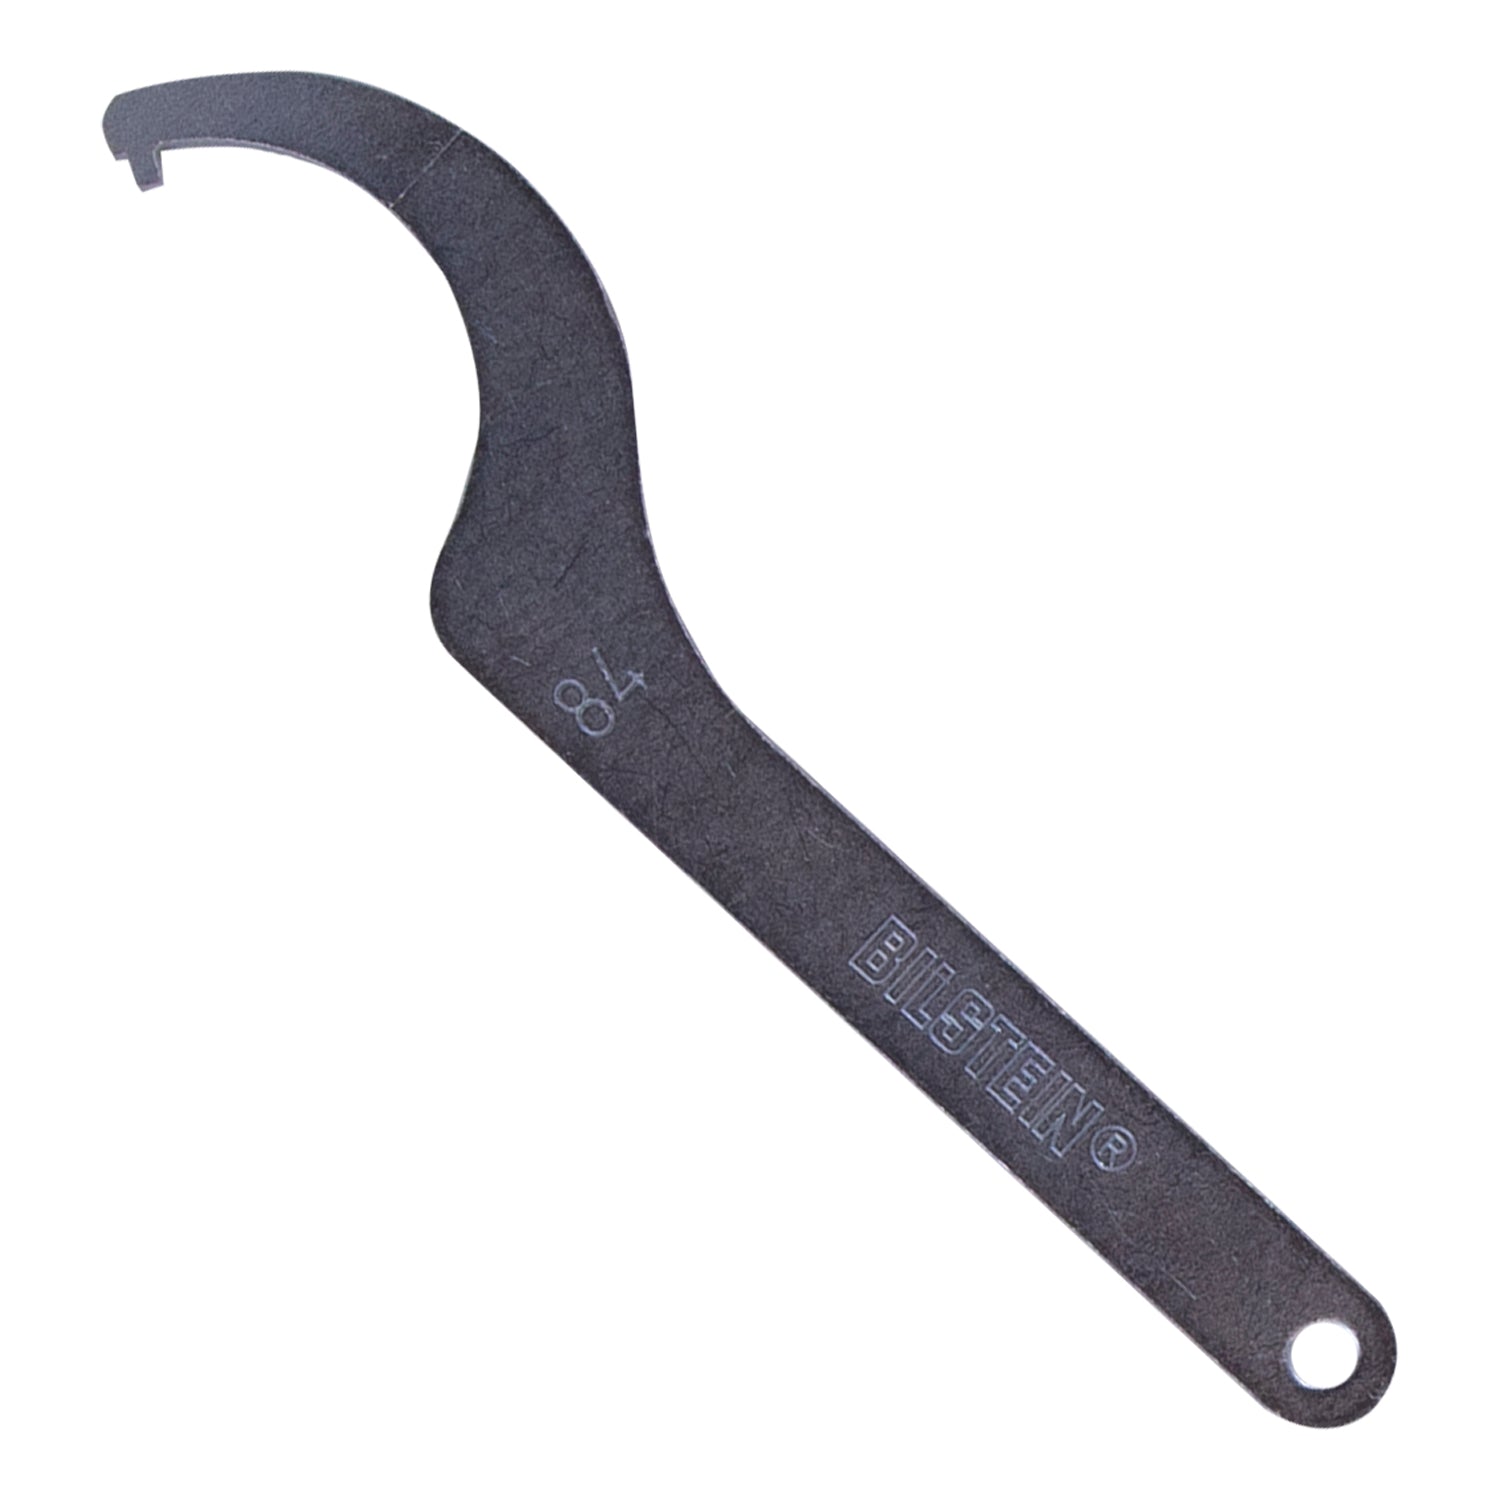 19101x - Bilstein Coil Over Spanner Wrench Set (Notch Style)